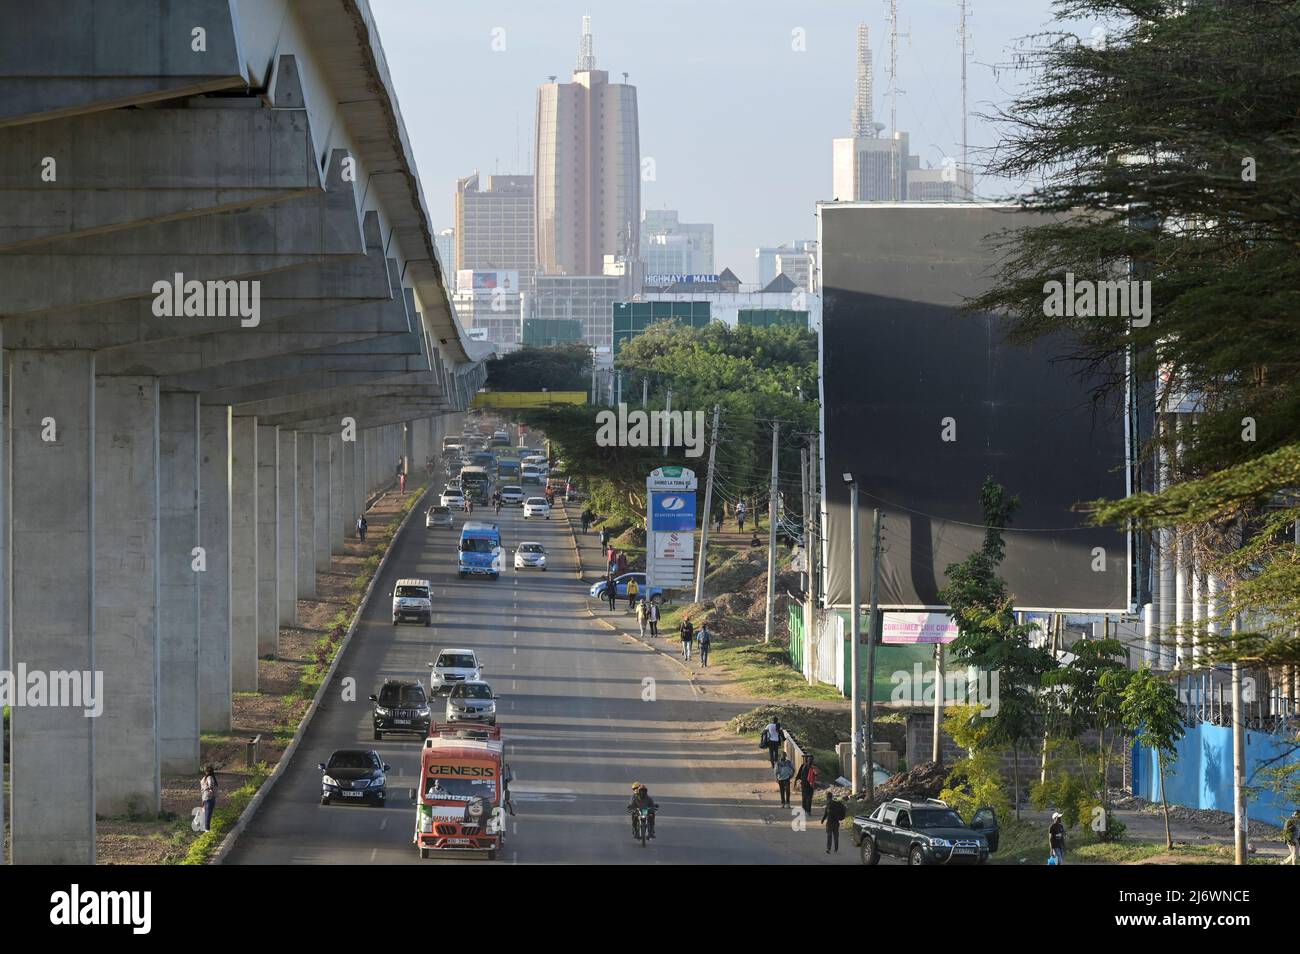 KENYA, autopista de Nairobi, construcción de autopista de peaje por la empresa china China Road and Bridge Corporation CRBC / KENIA, Nairobi, Maut Autobahn Finanzierung und Bau durch chinesische Firma CRBC Foto de stock